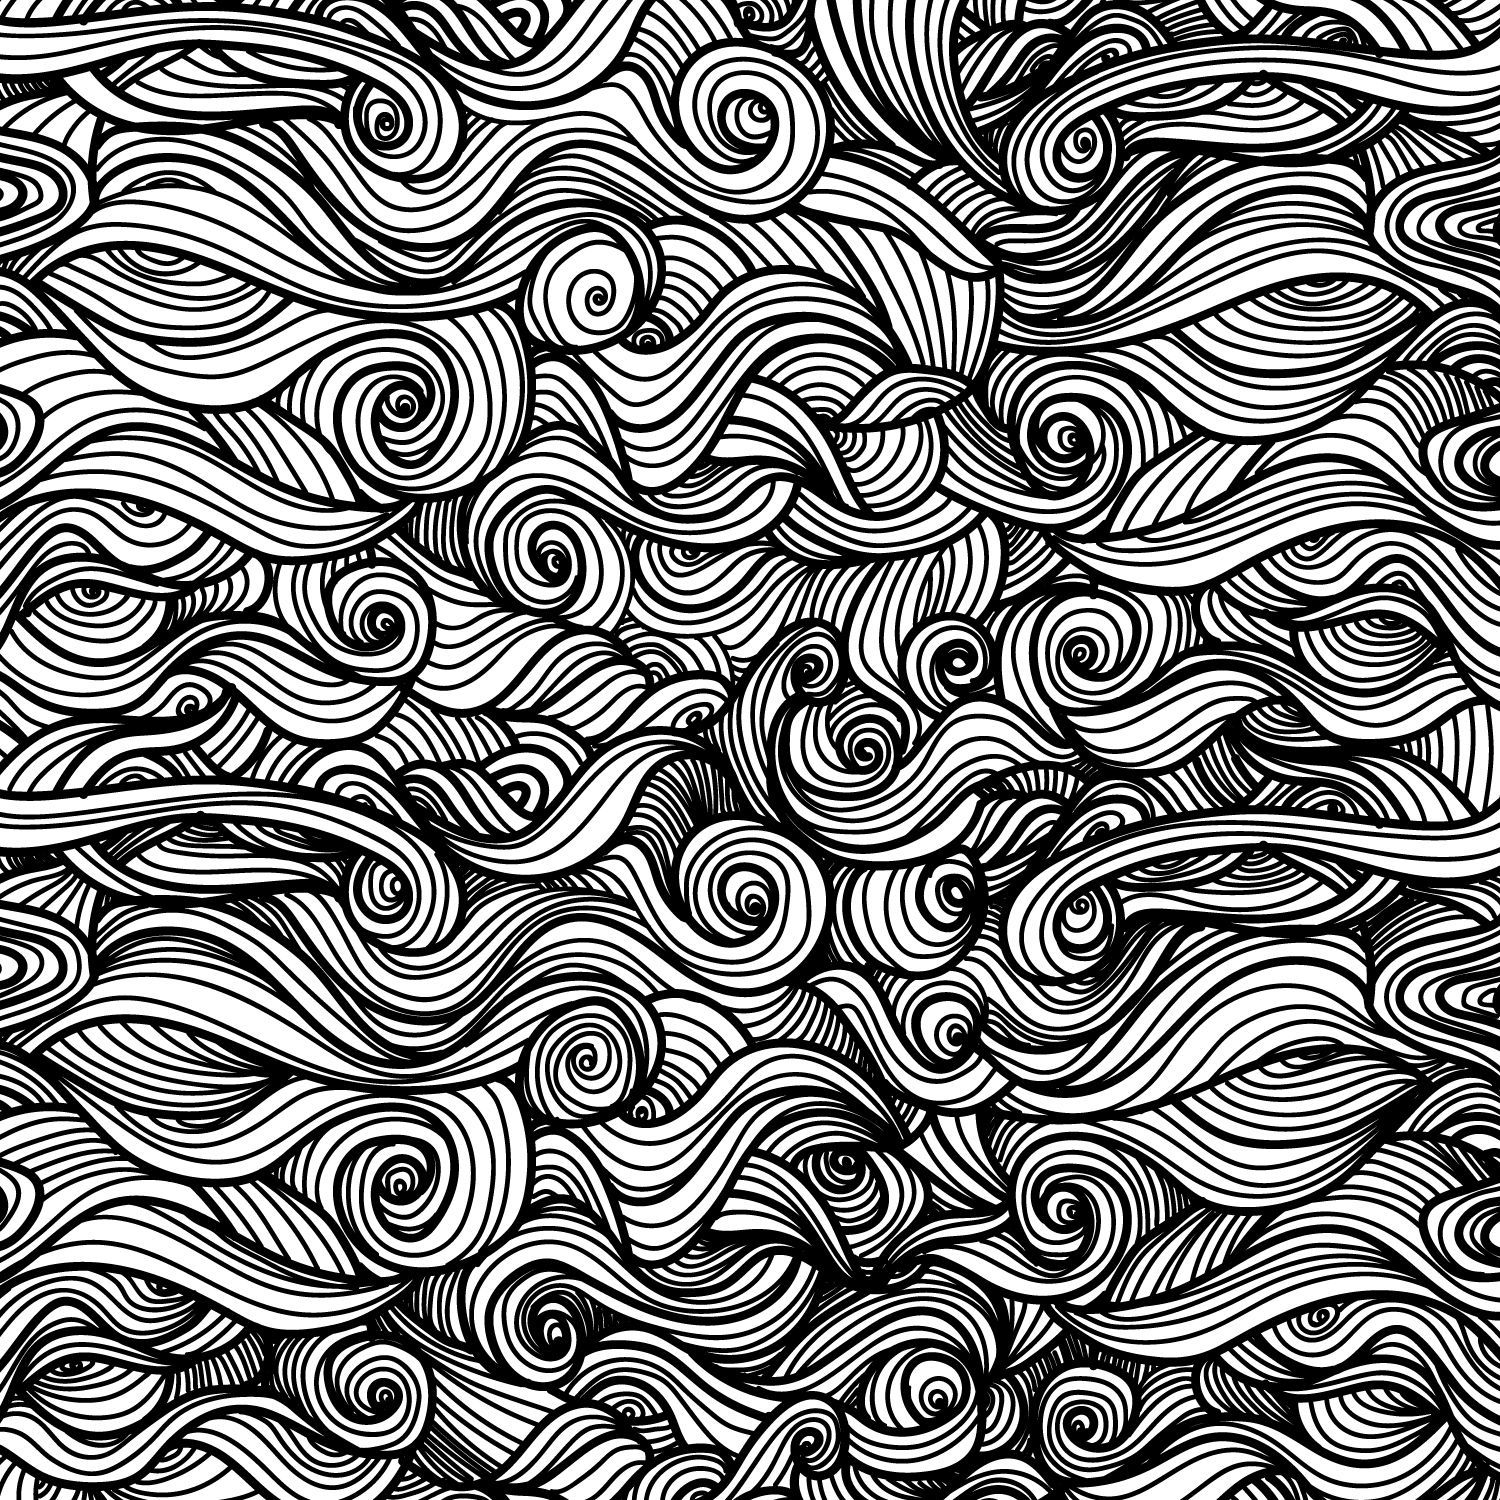 Curly swirls ornamental background